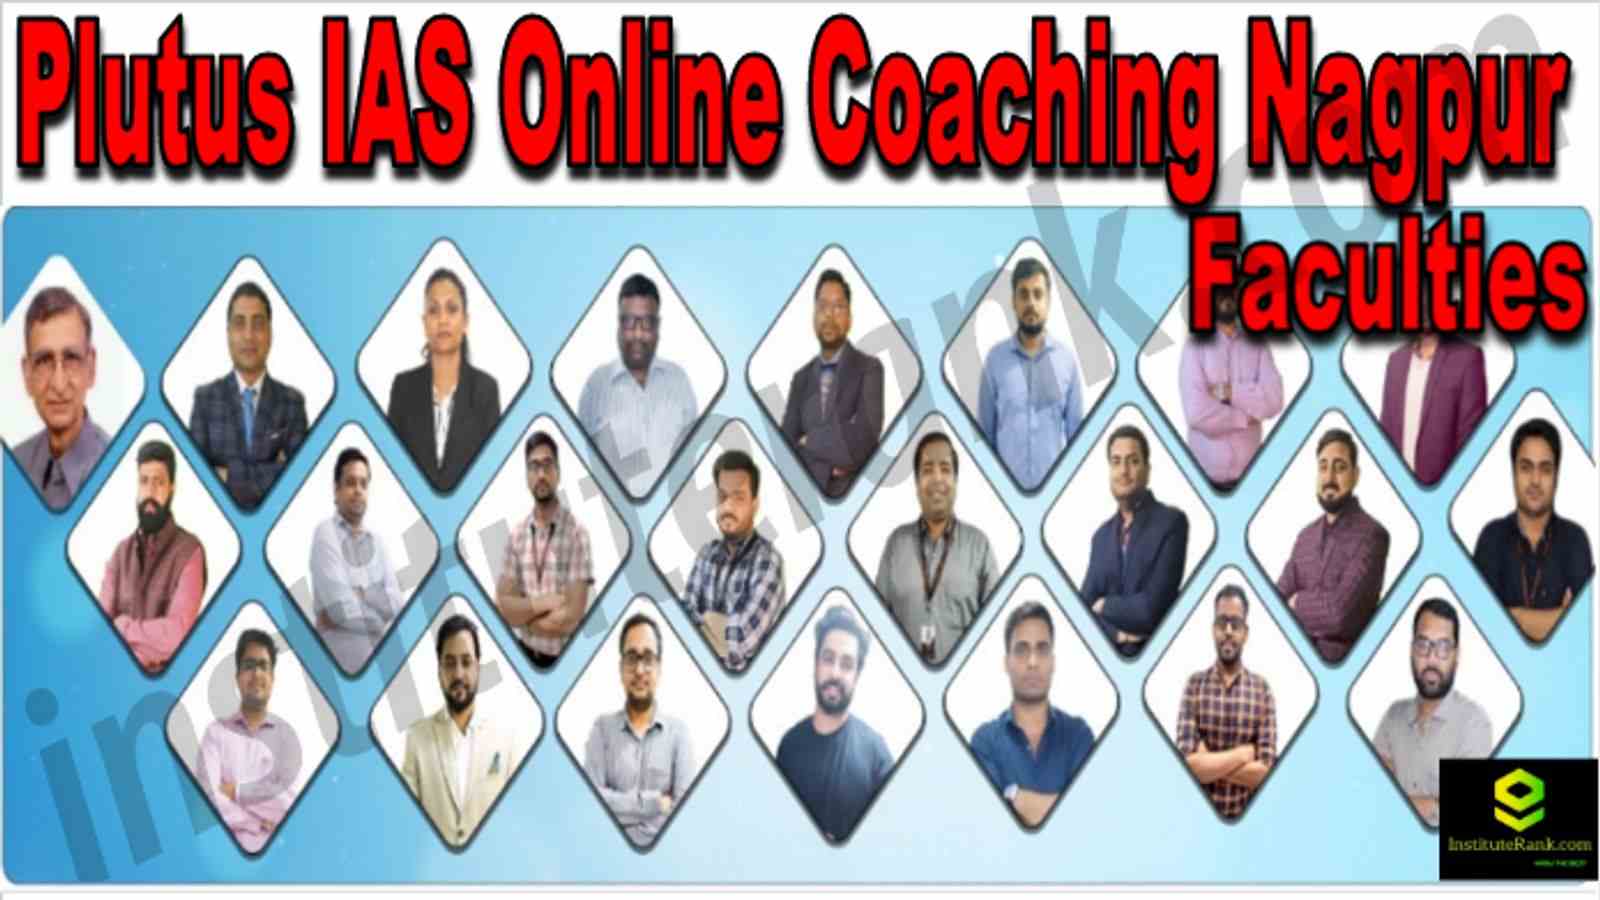 Plutus IAS Online Coaching Nagpur Reviews Faculties